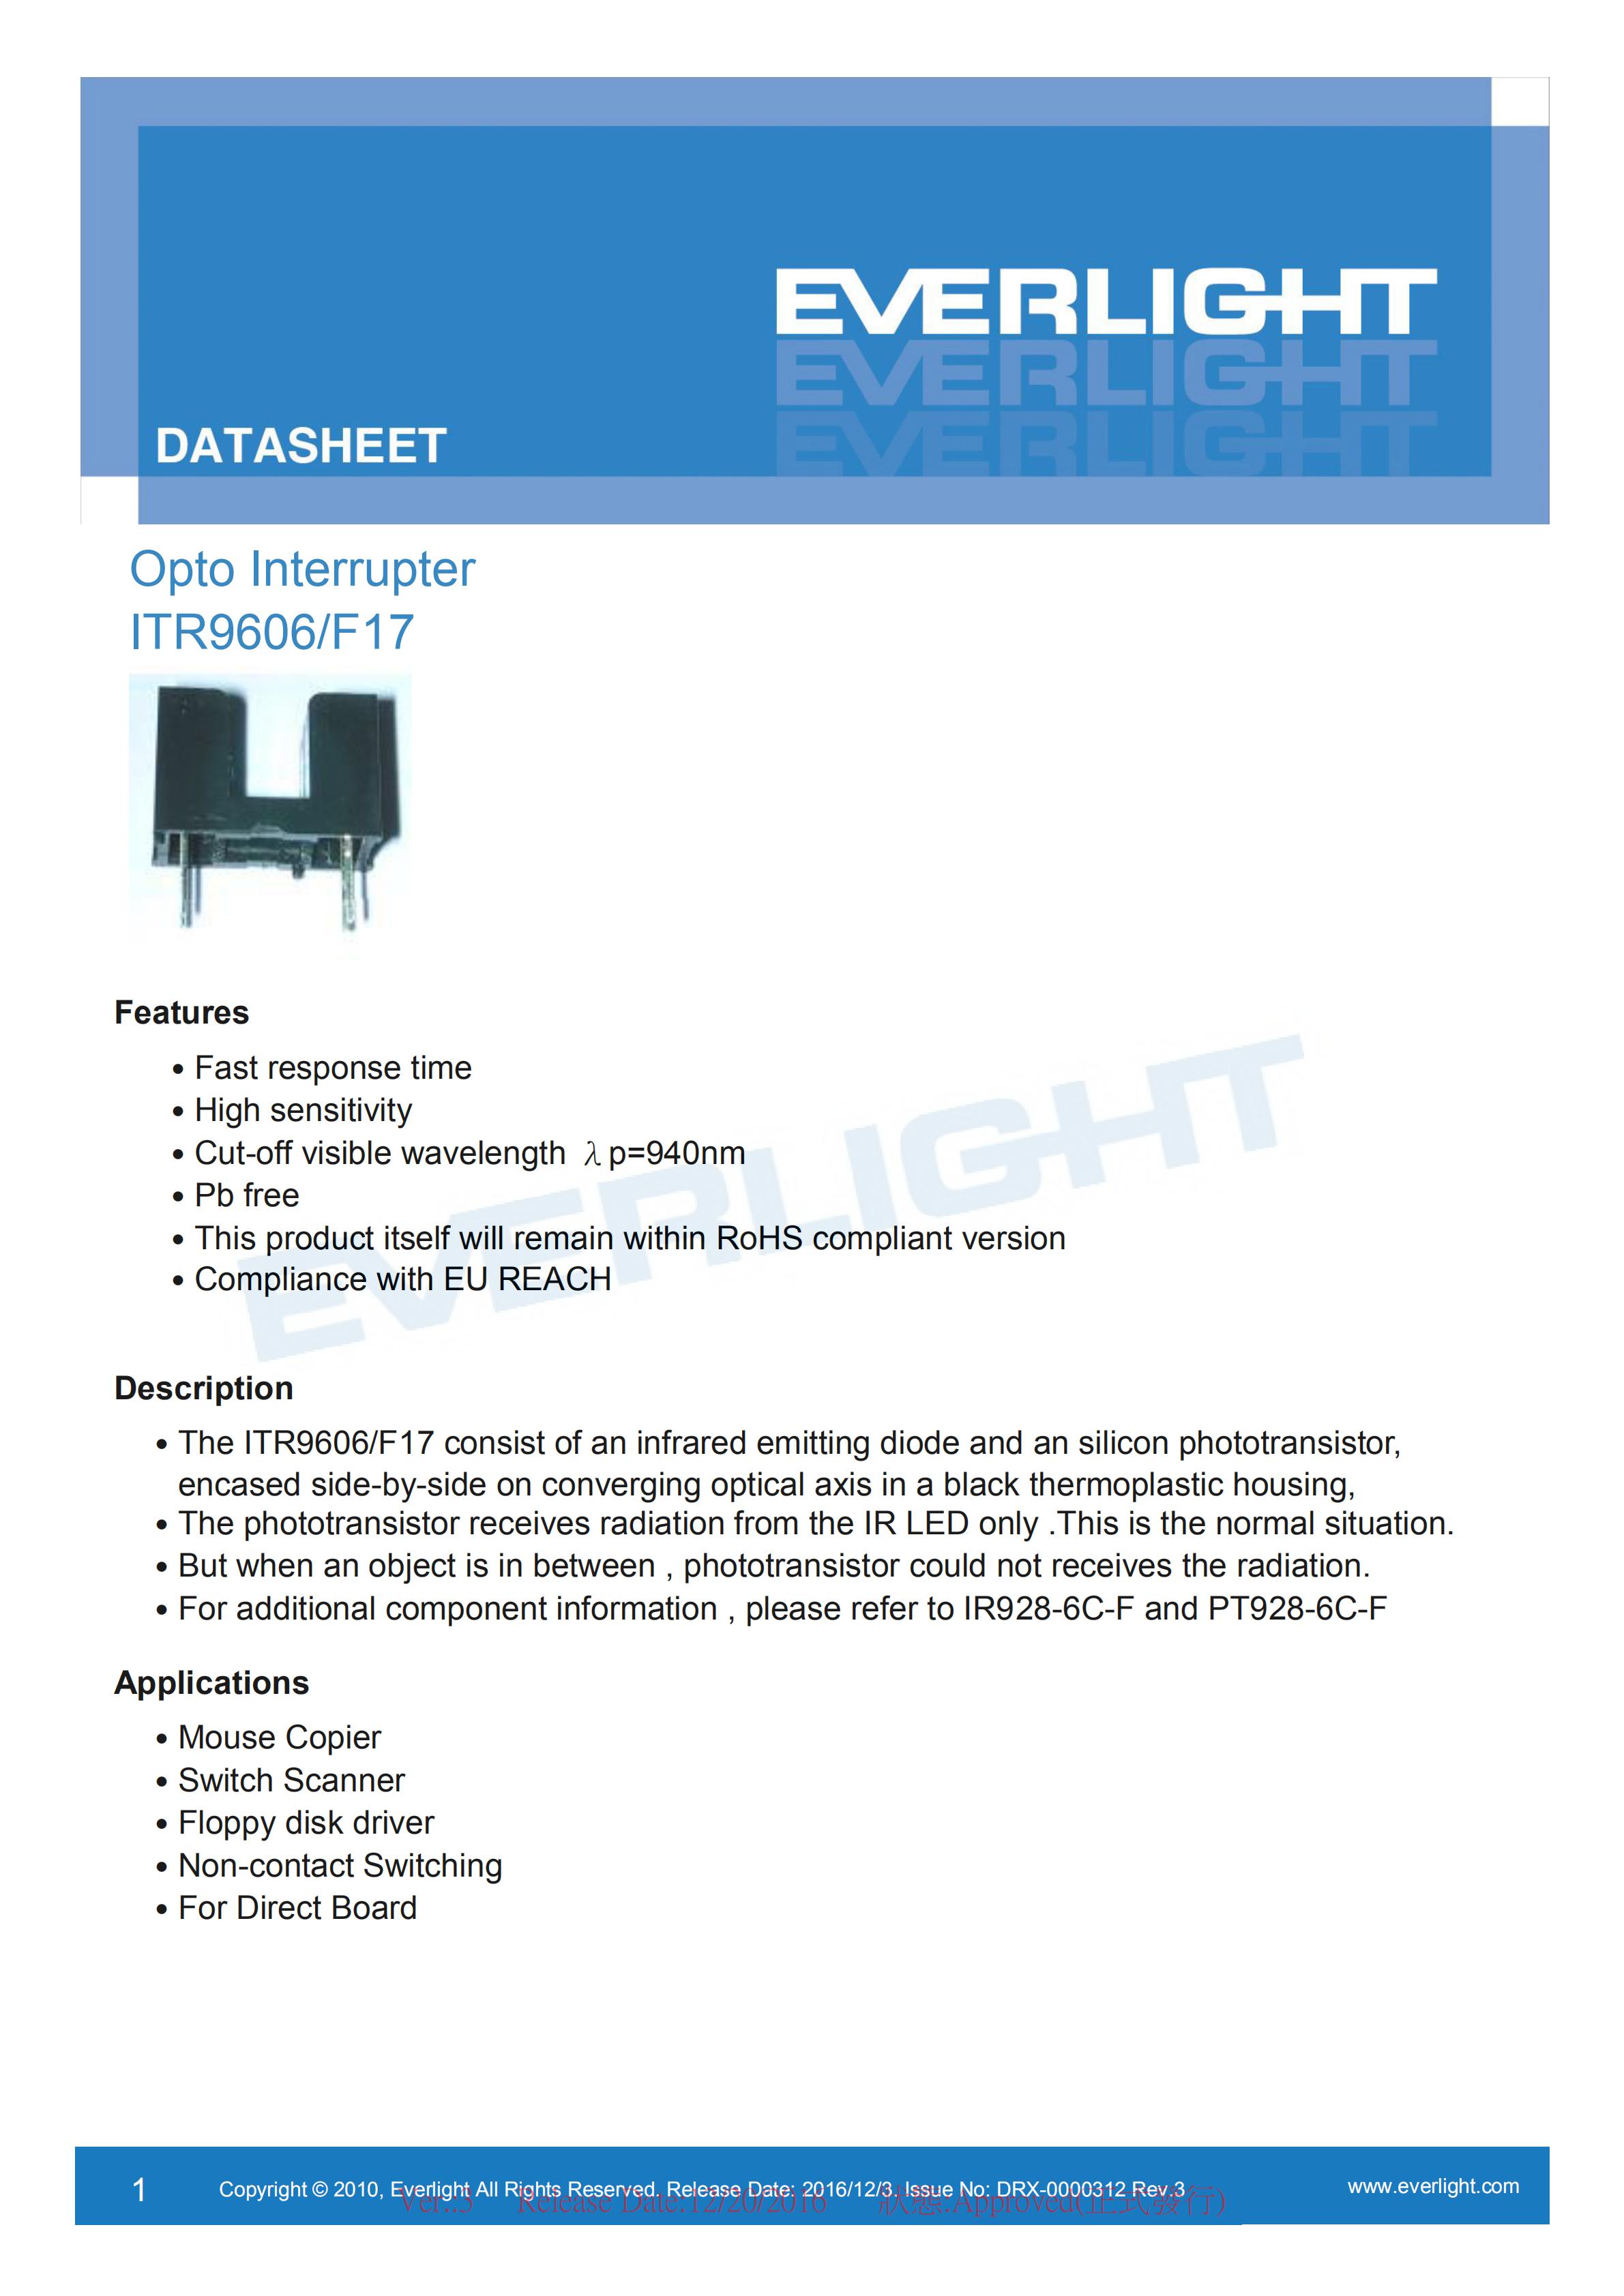 EVERLIGHT Optical Switch ITR9606-F17 Opto Interrupter Datasheet